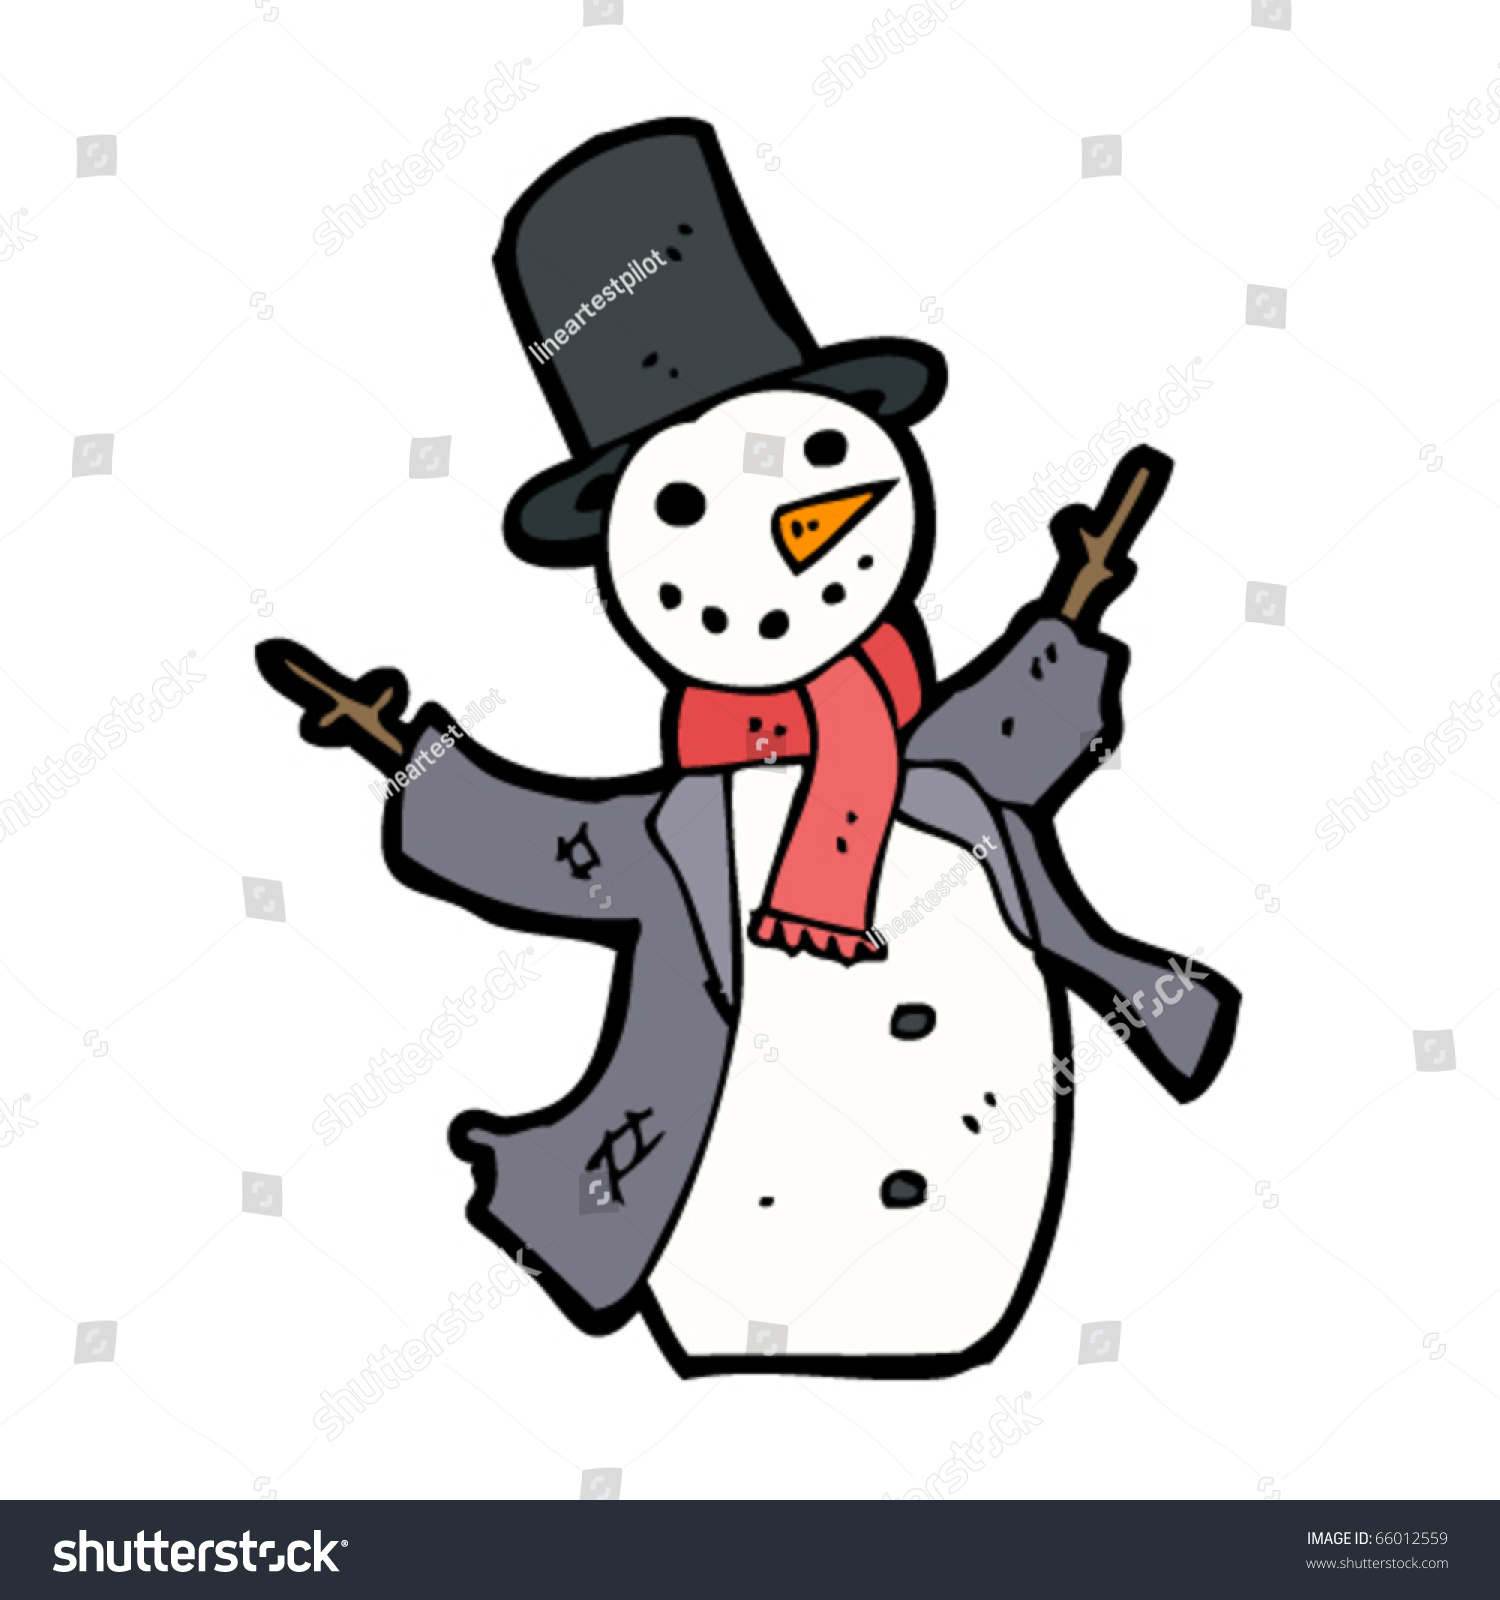 Happy Snowman Cartoon Stock Vector Illustration 66012559 : Shutterstock